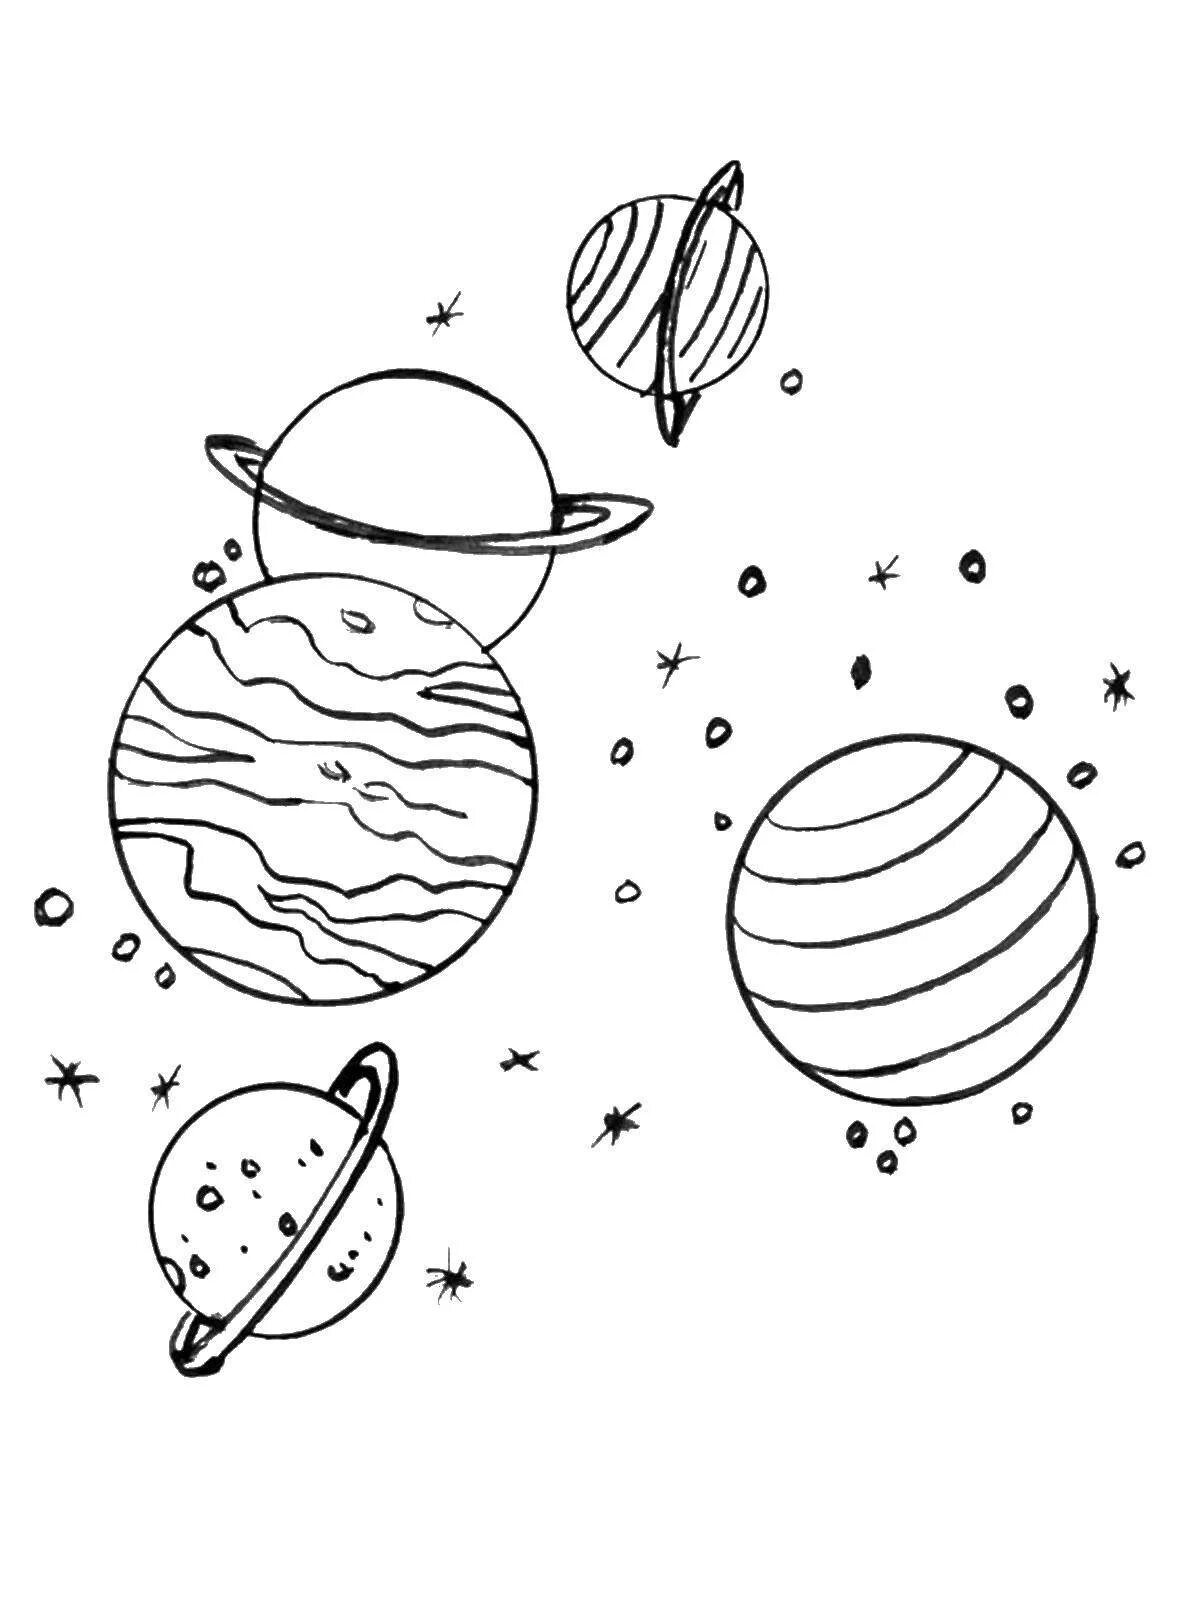 Картинки планет раскраска. Раскраска космос и планеты. Космос раскраска для детей. Планеты для раскрашивания для детей. Планеты раскраска для детей.